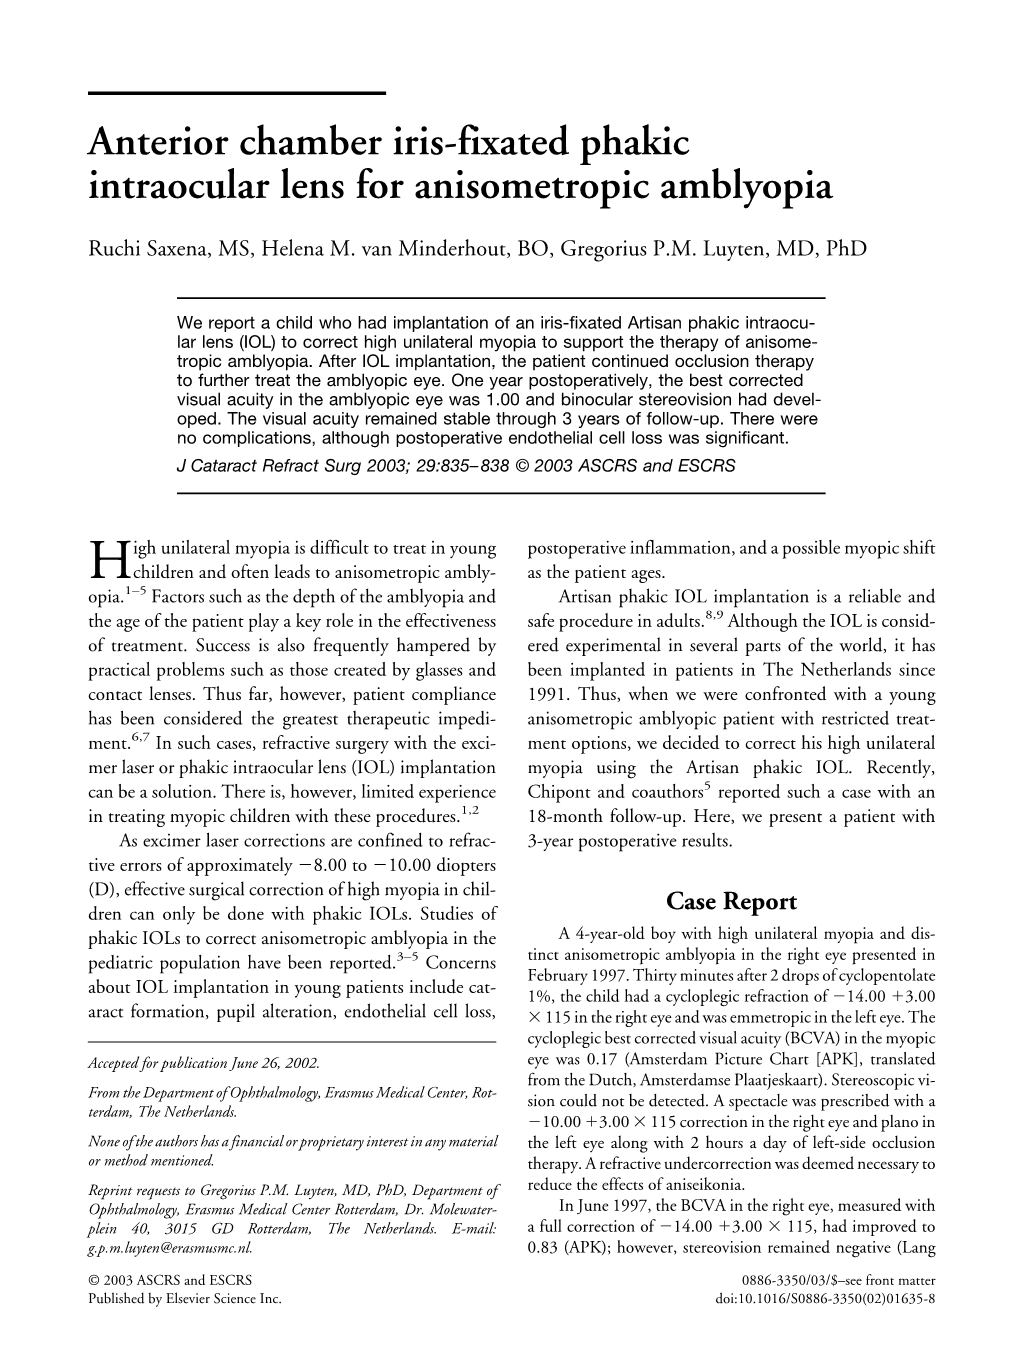 Anterior Chamber Iris-Fixated Phakic Intraocular Lens for Anisometropic Amblyopia